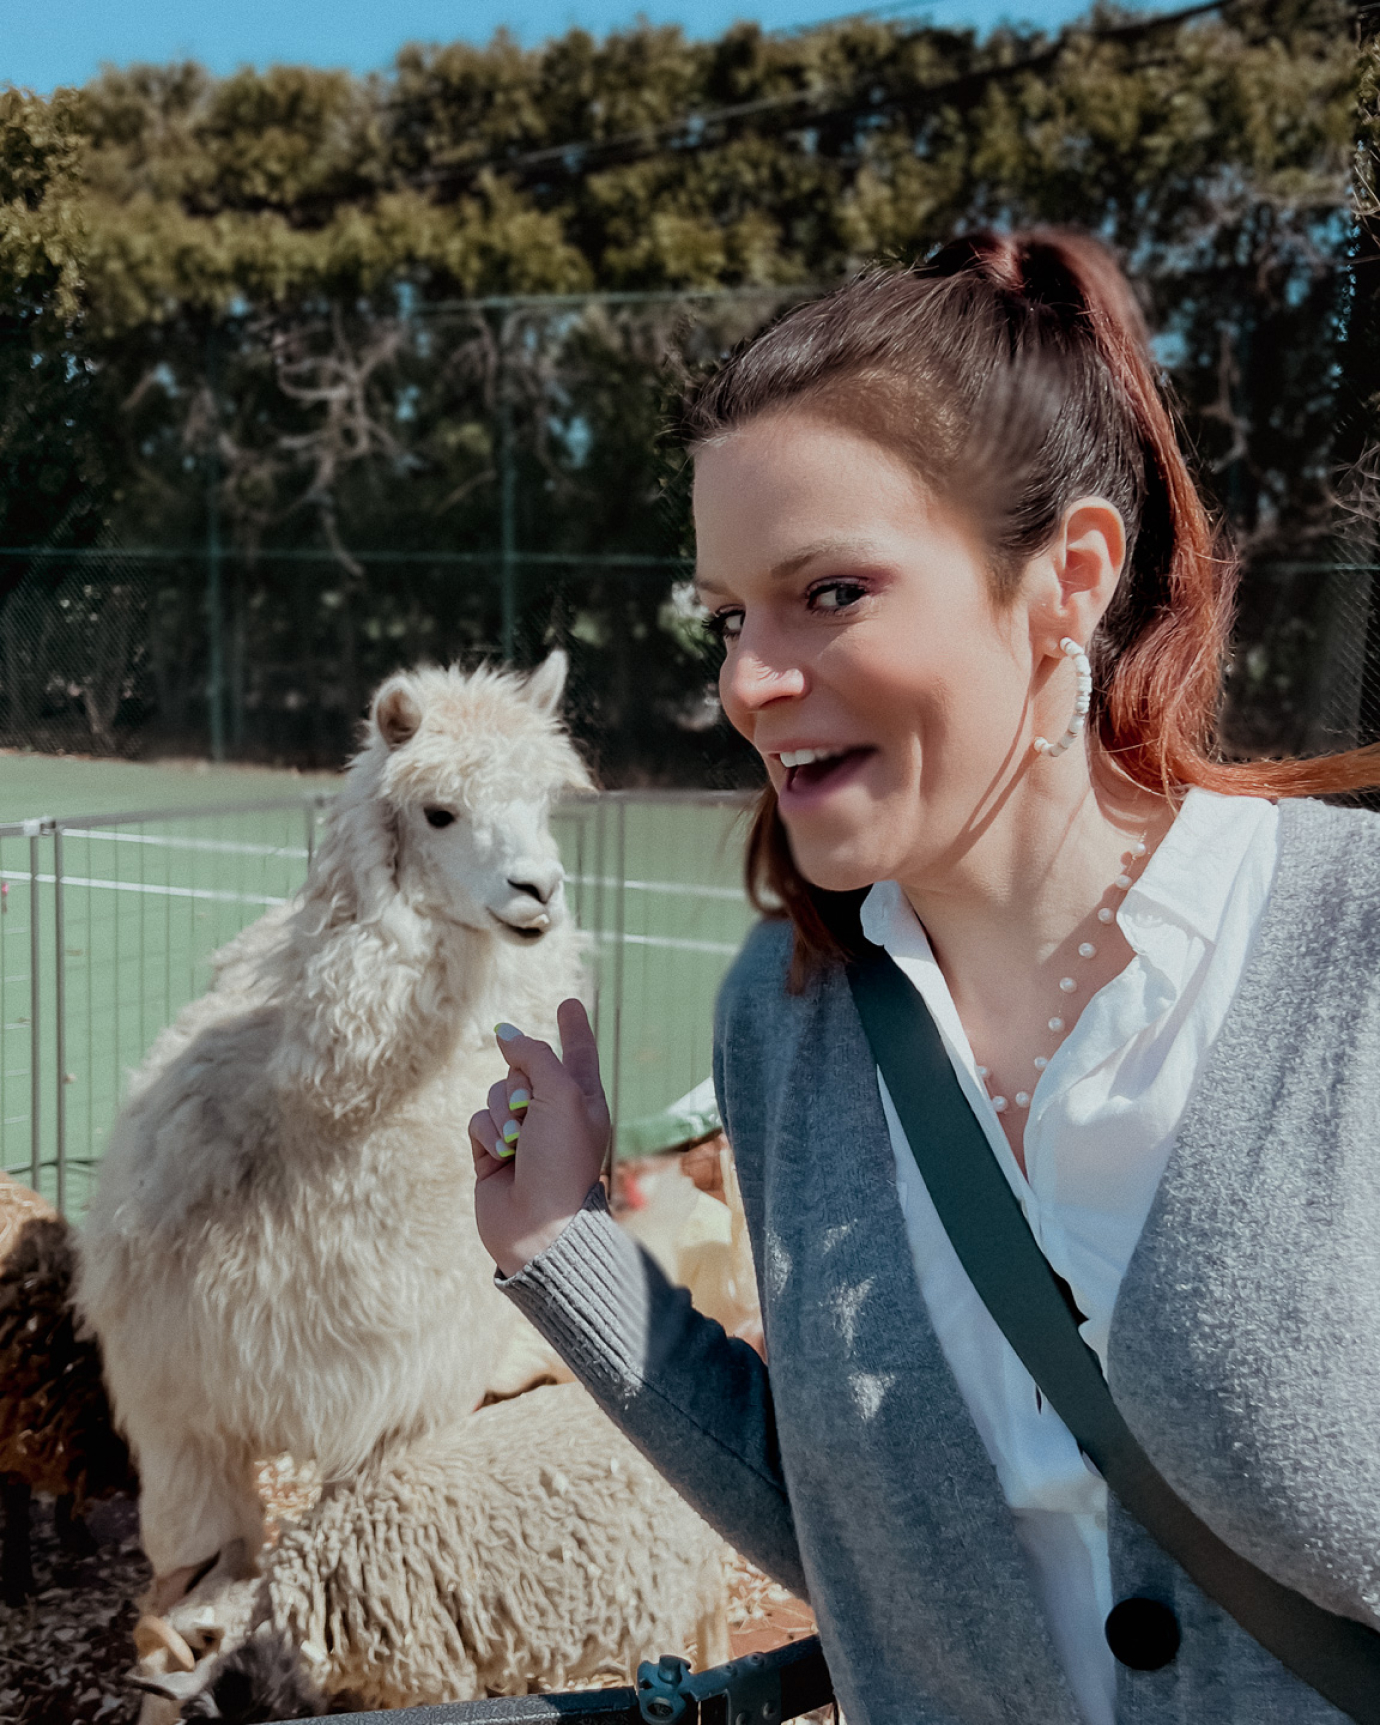 Casey Kolp with a white llama.